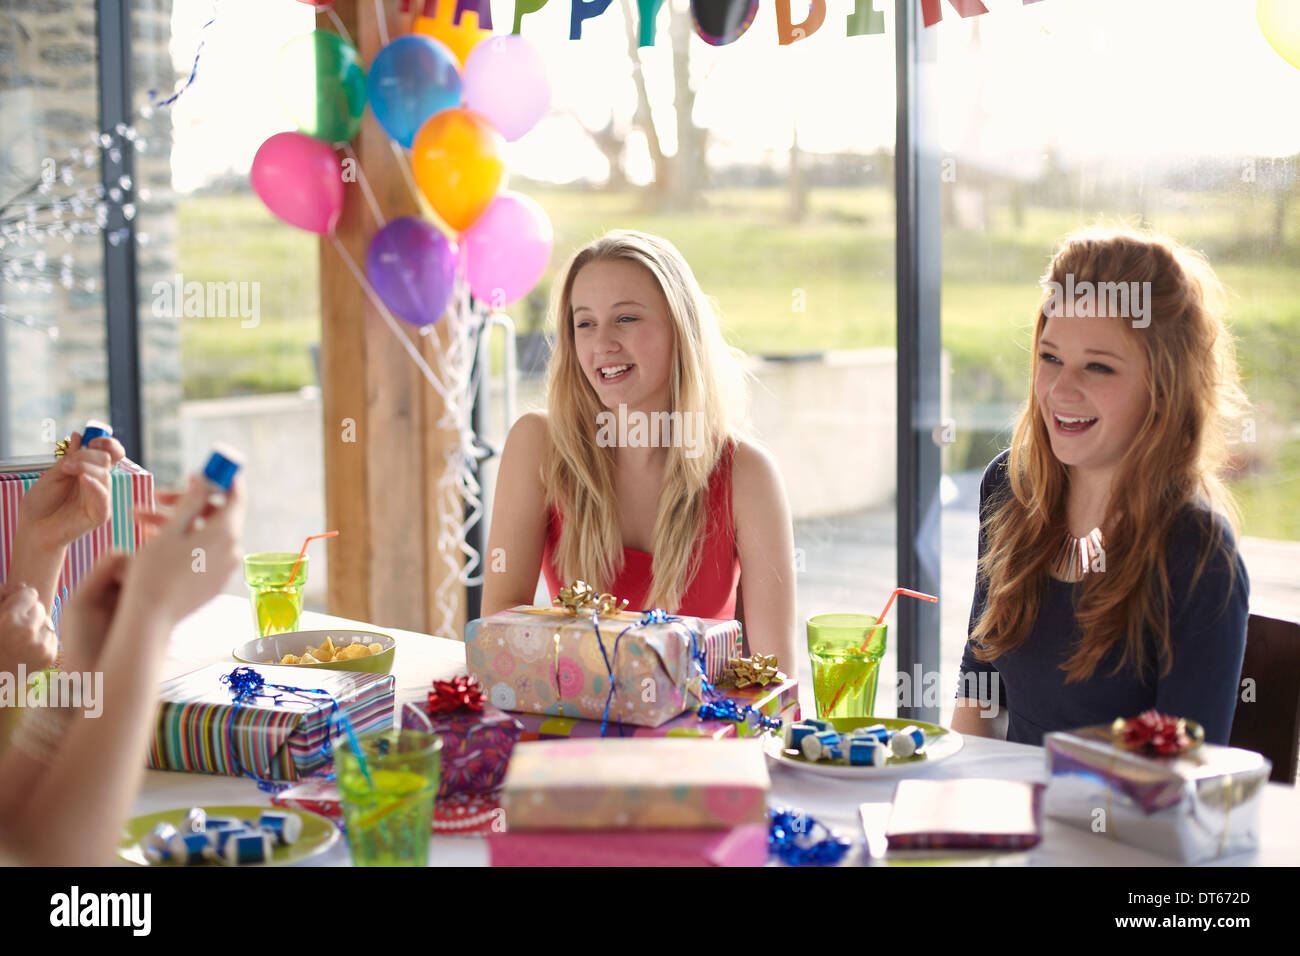 Adolescente et friends enjoying Birthday party Banque D'Images